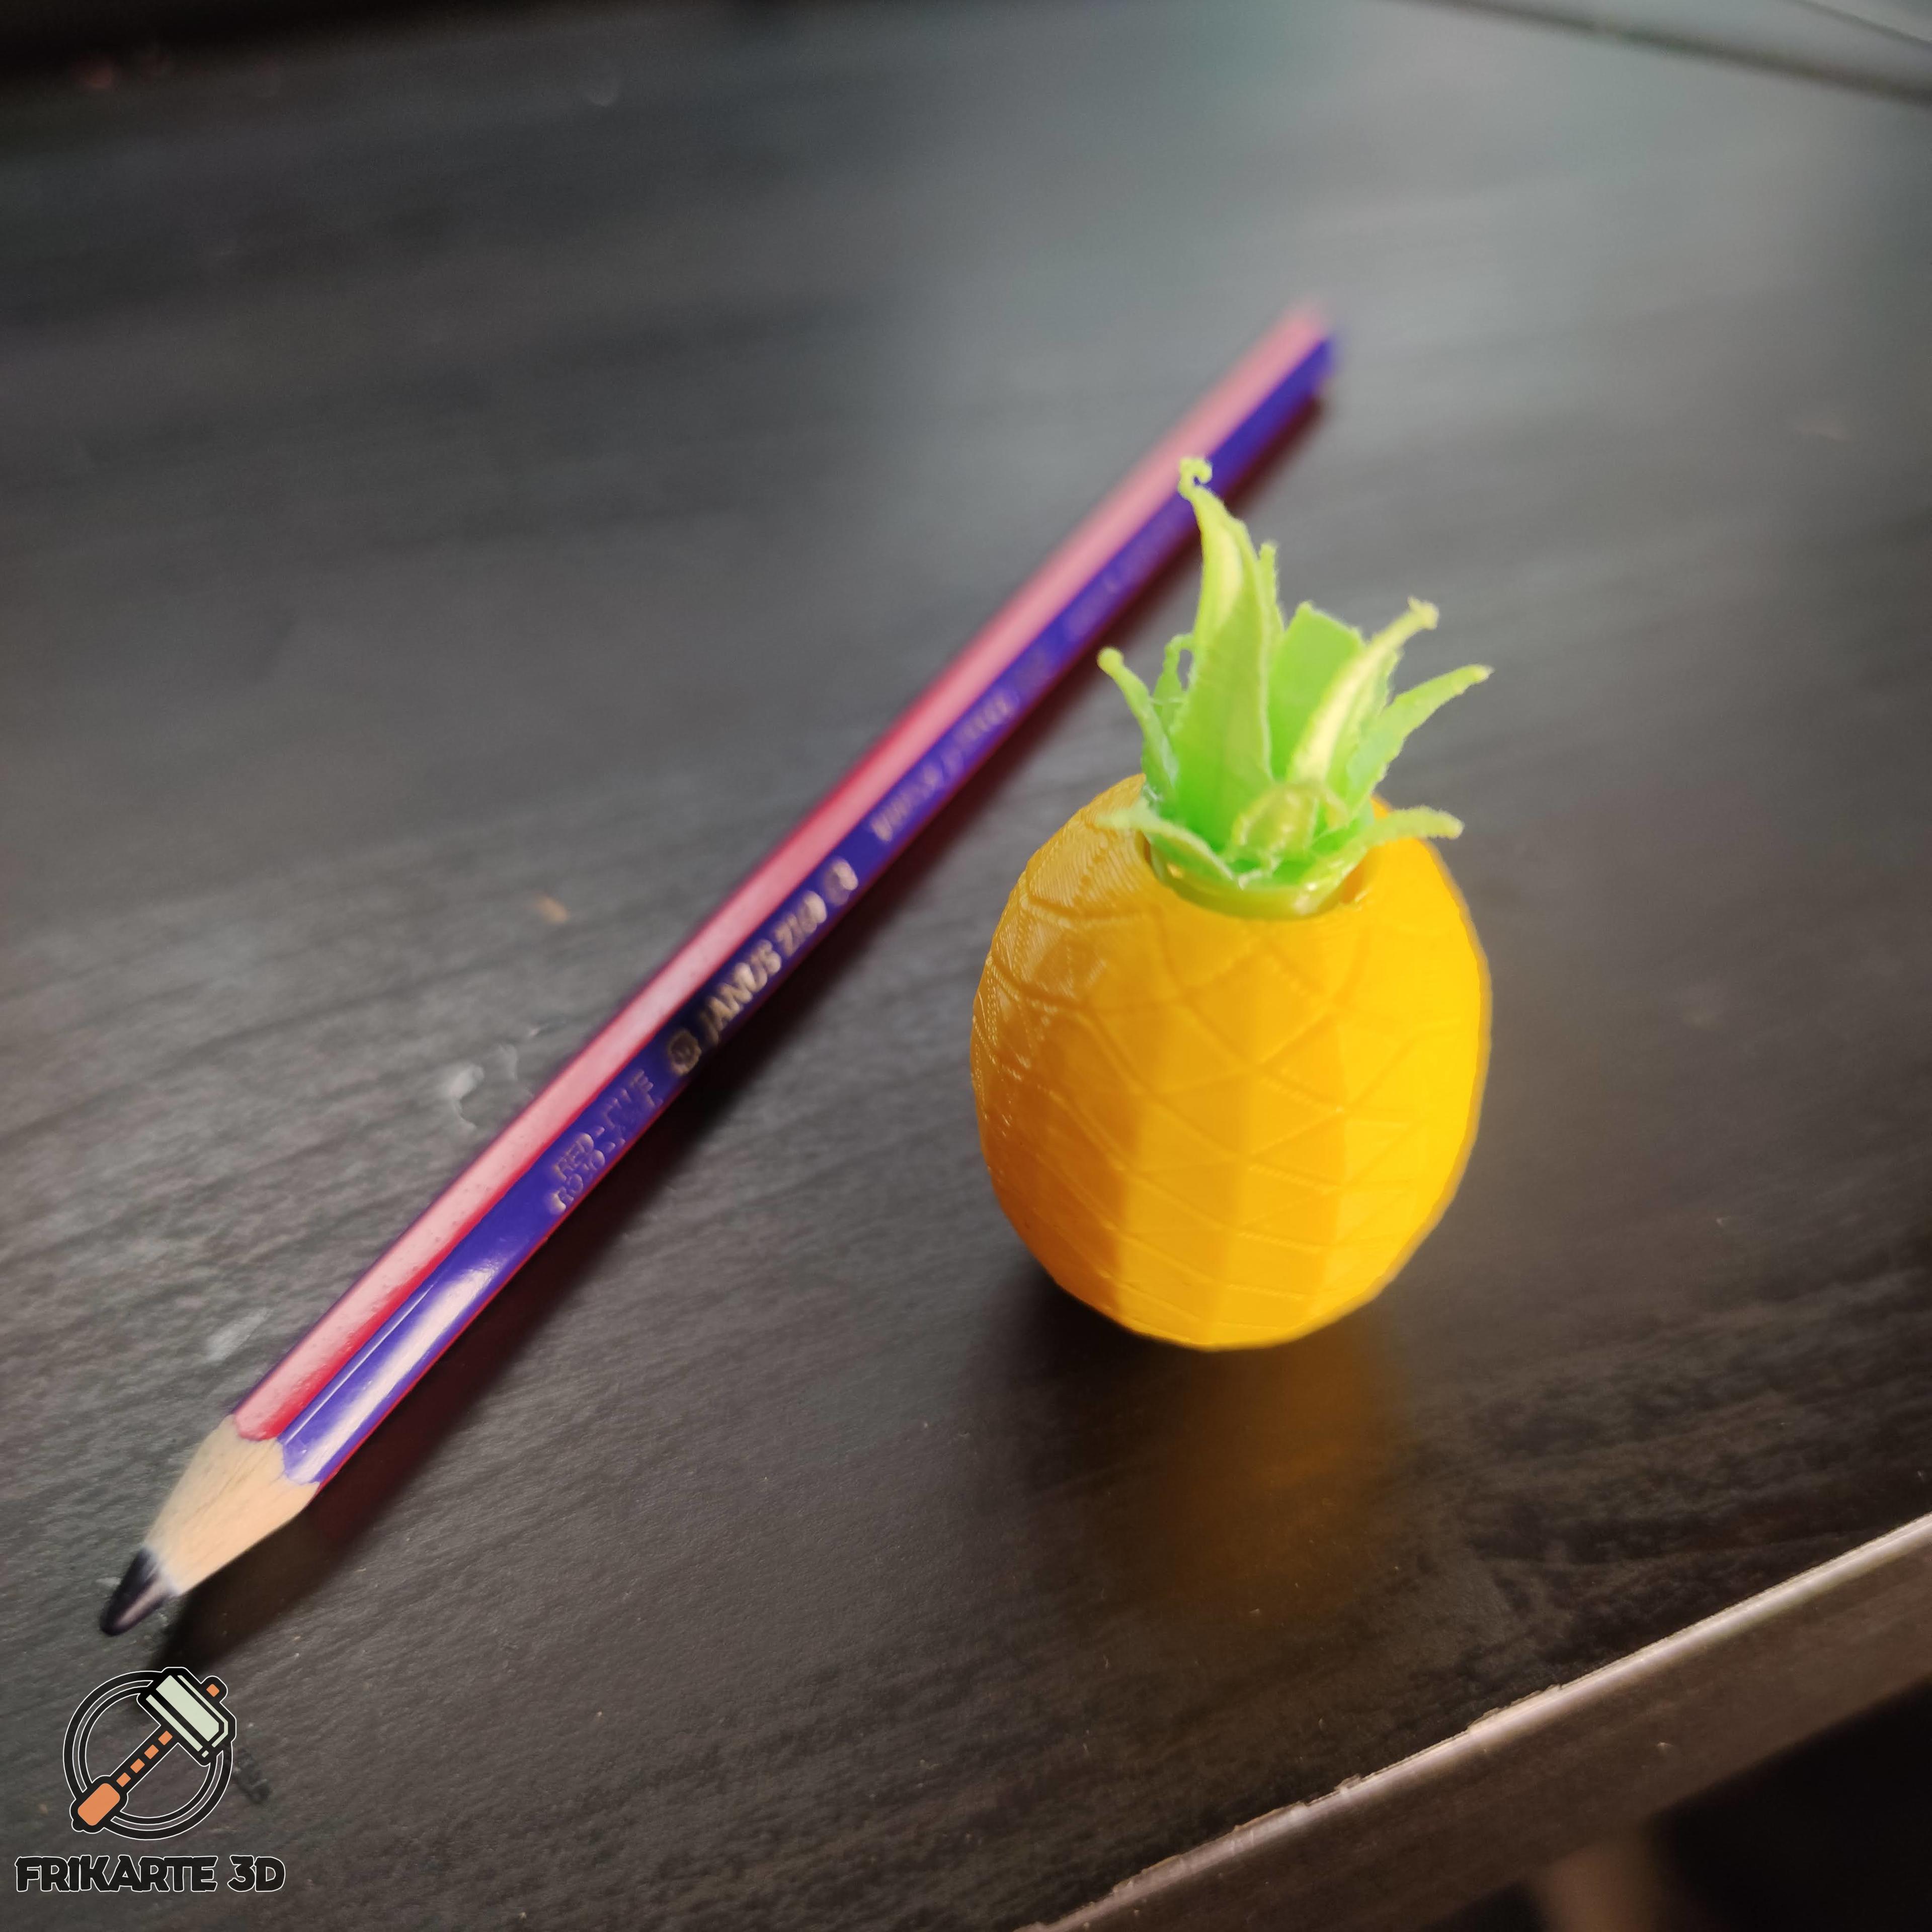 Apple Pencil Topper - BackToSchool - 3D model by frikarte3D on Thangs